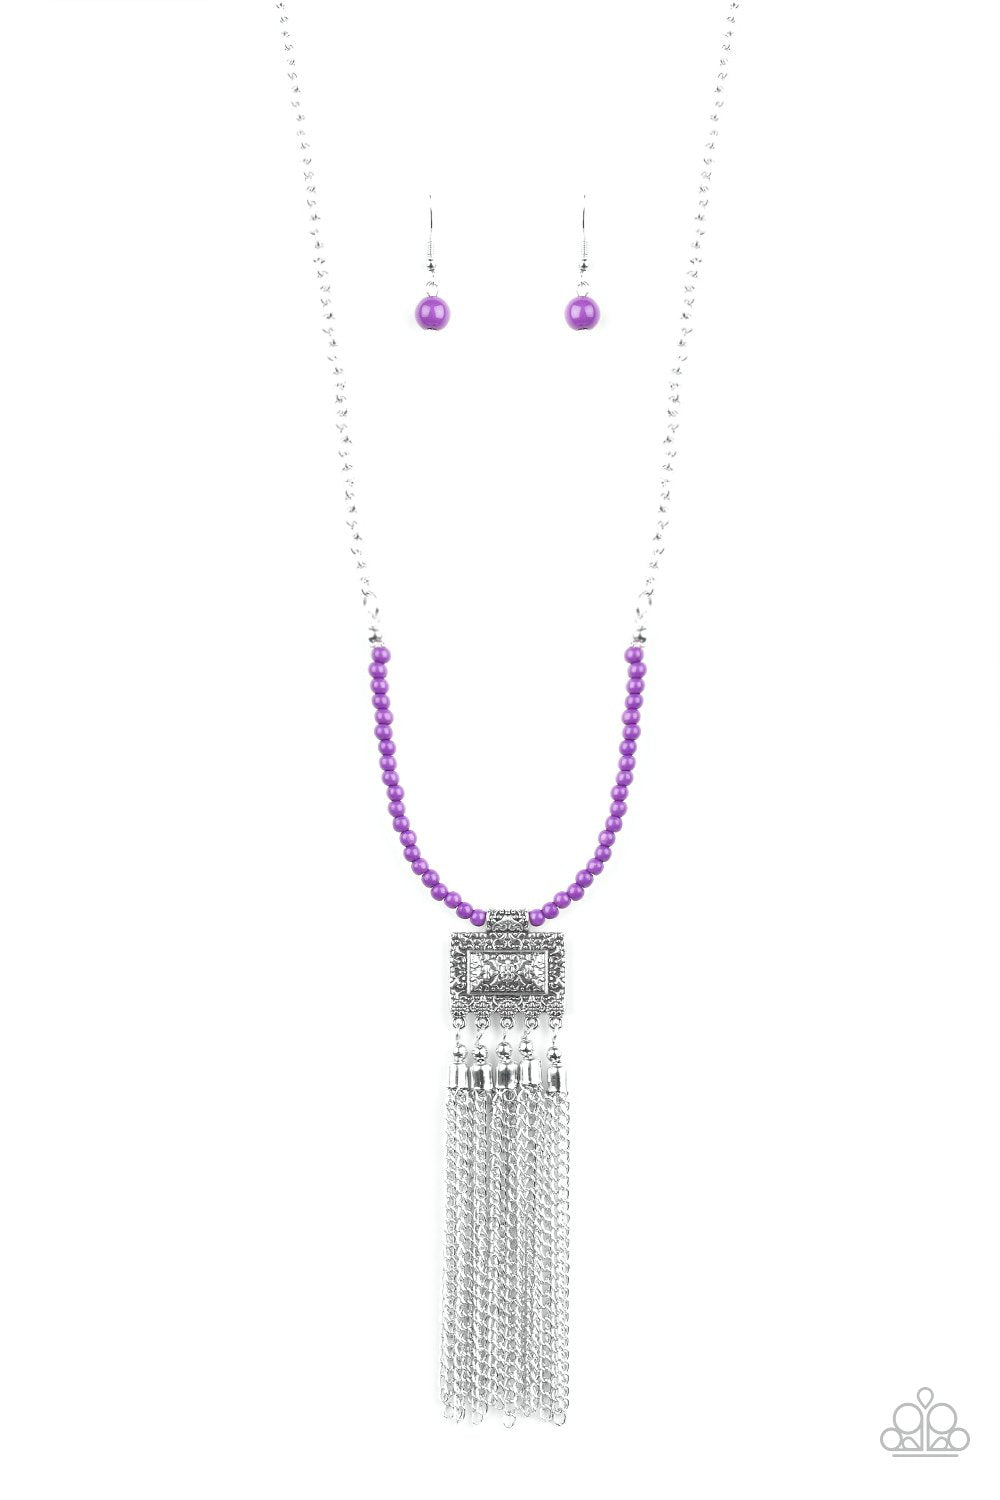 Mayan Masquerade Purple Necklace - Paparazzi Accessories - lightbox -CarasShop.com - $5 Jewelry by Cara Jewels